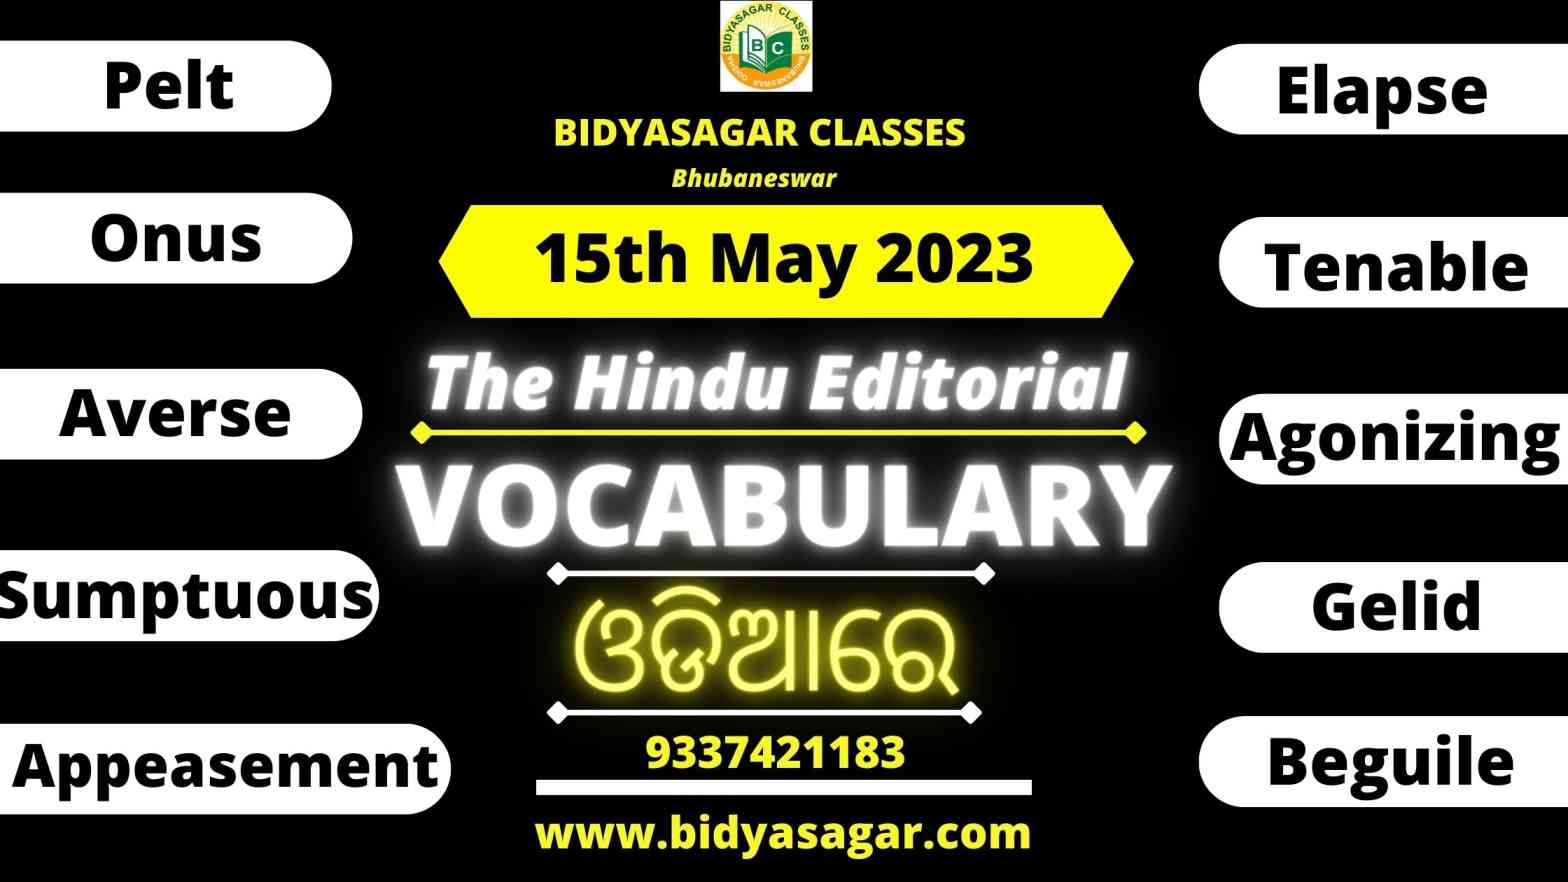 The Hindu Editorial Vocabulary of 15th May 2023